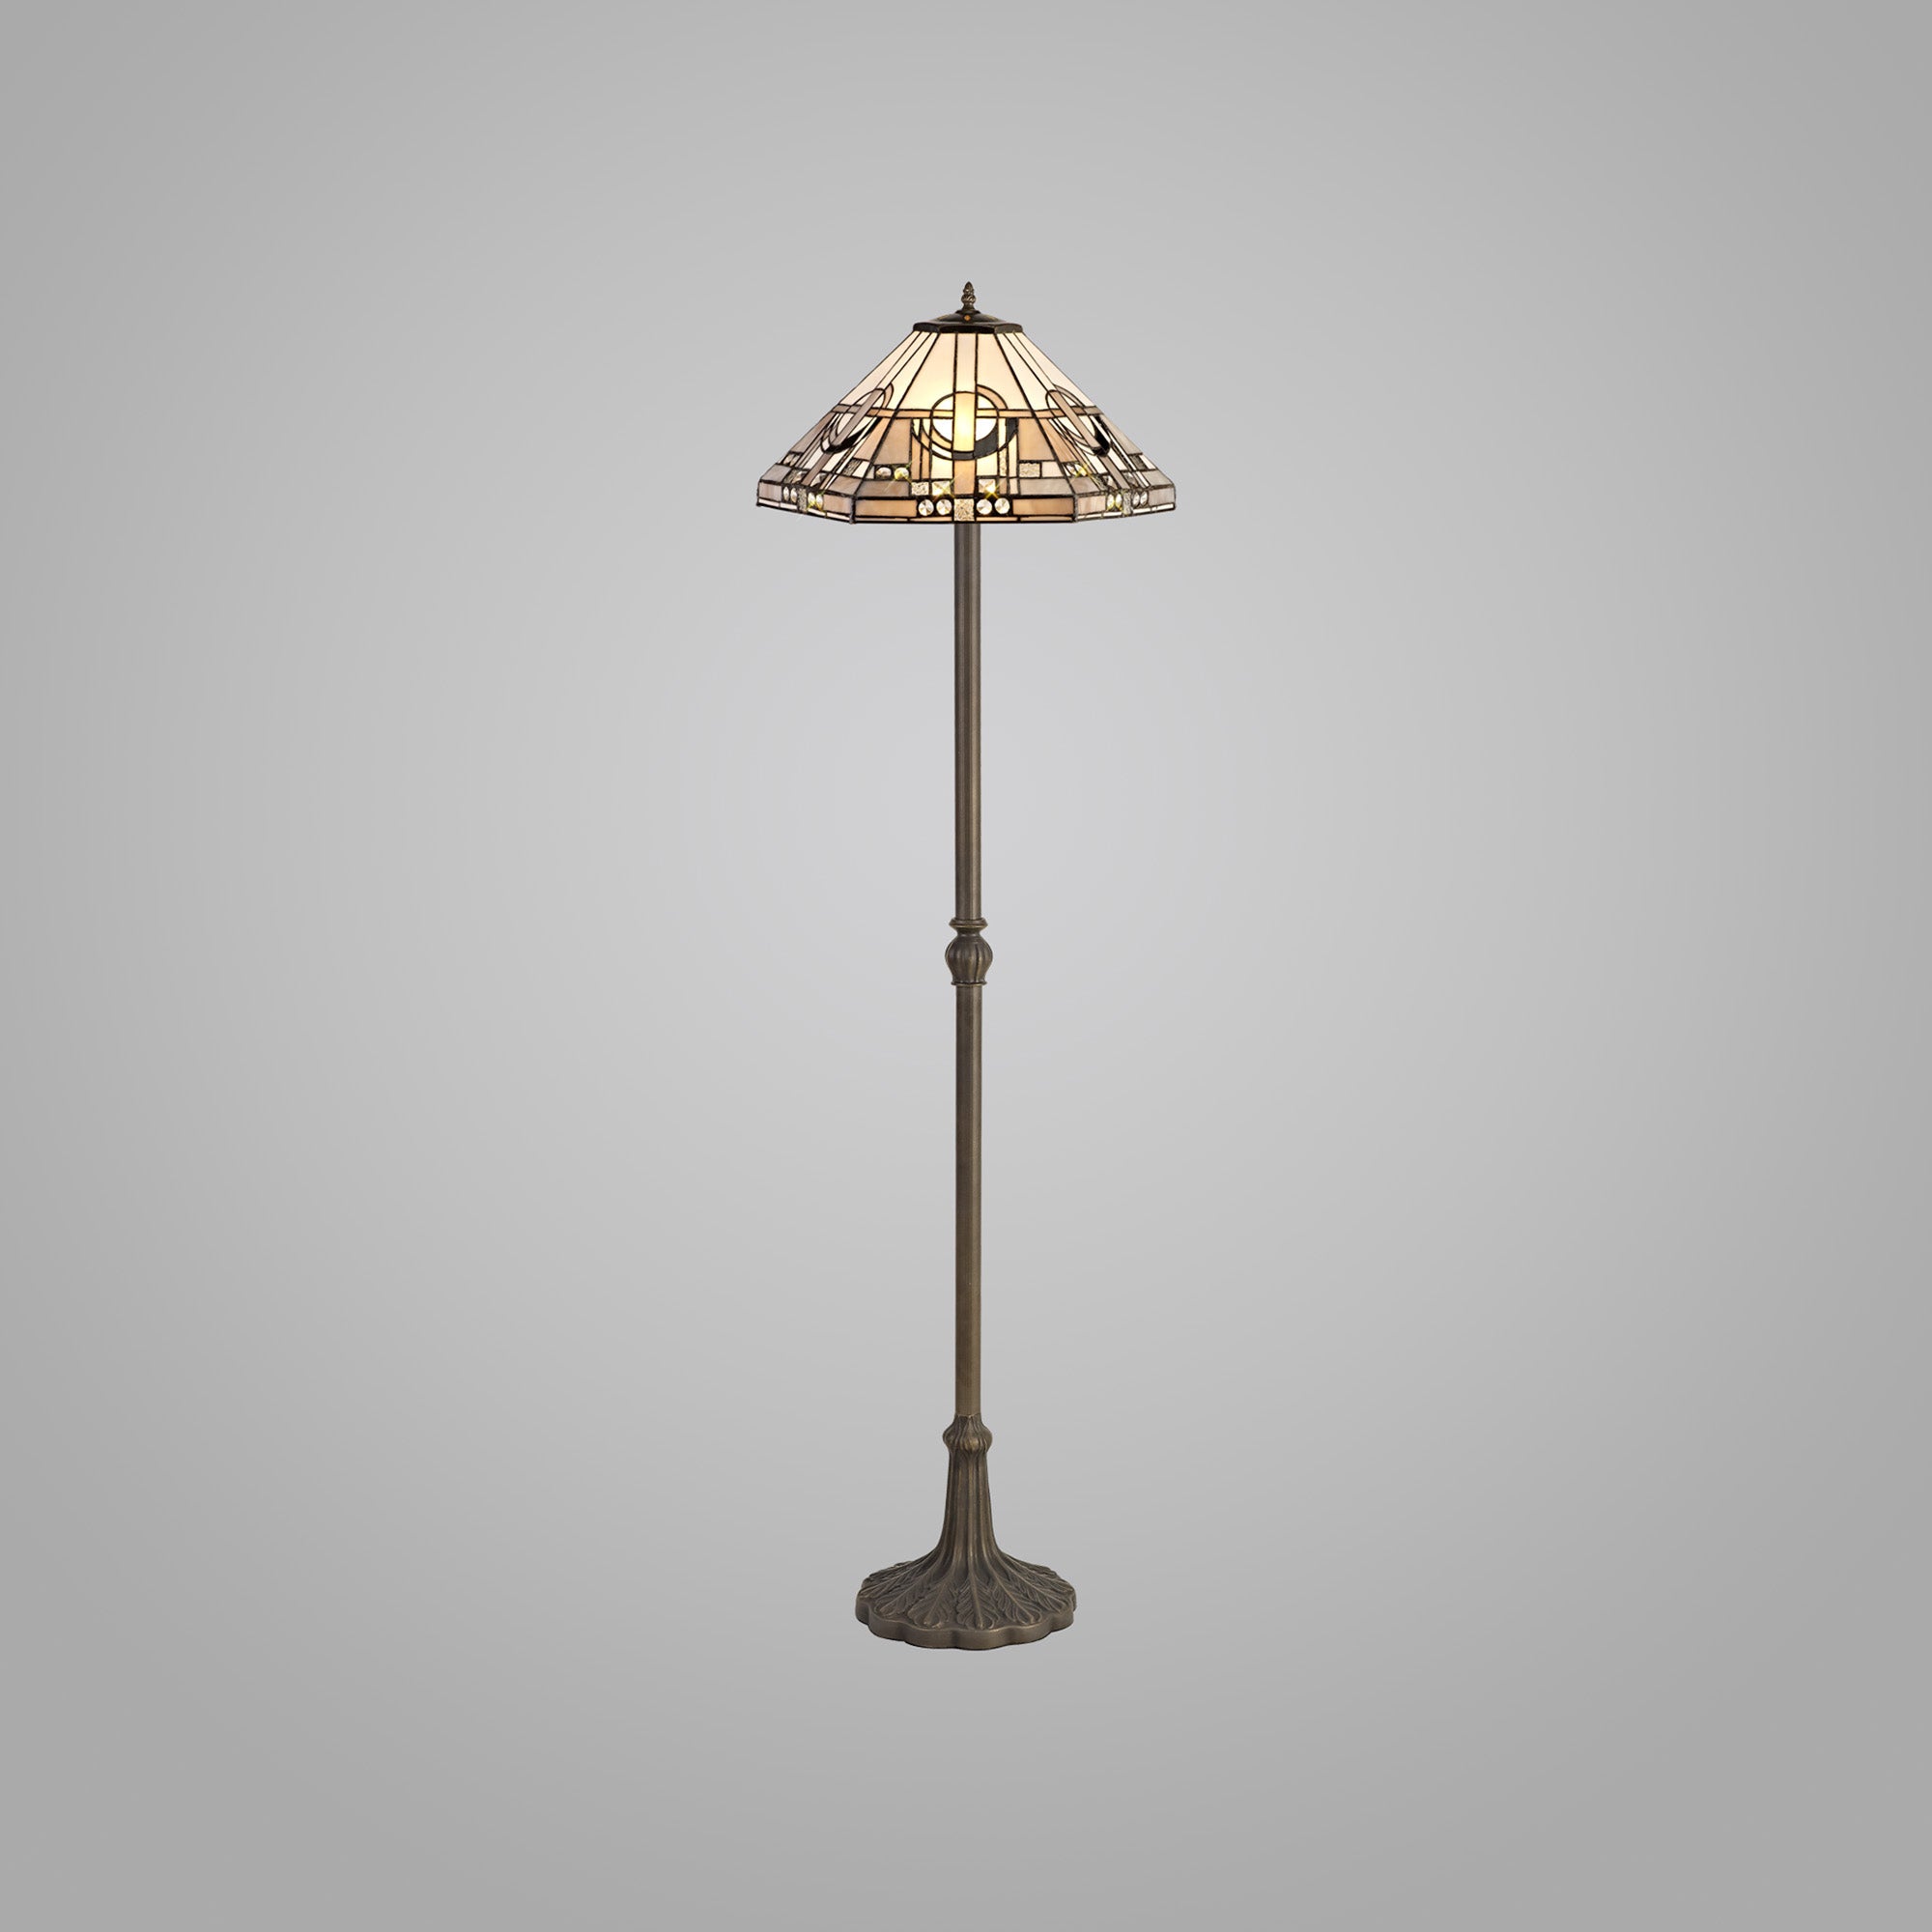 Atek 2 Light Leaf Design Floor Lamp E27 With 40cm Tiffany Shade, White/Grey/Black/Clear Crystal/Aged Antique Brass